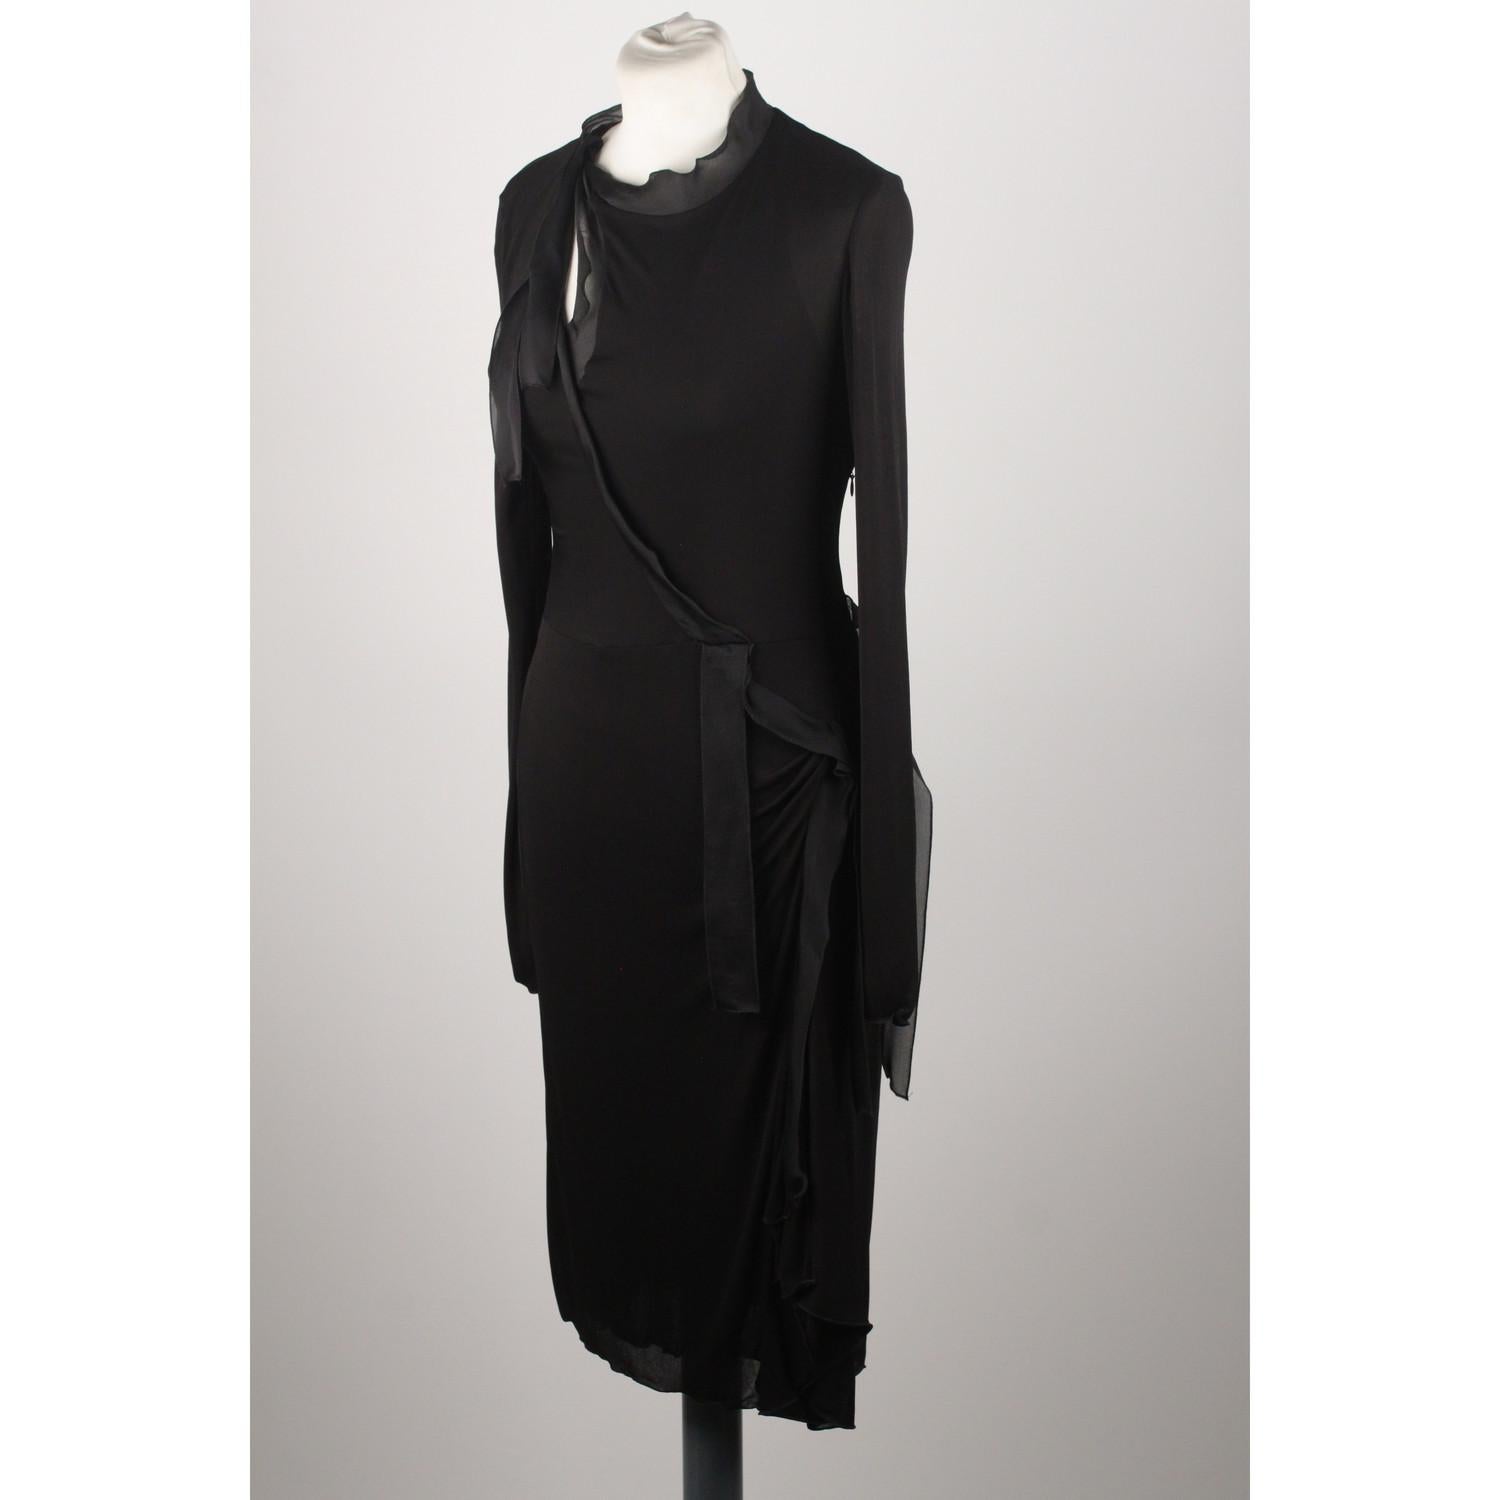 Yves Saint Laurent Rive Gauche Black Long Sleeve Dress Size S 3